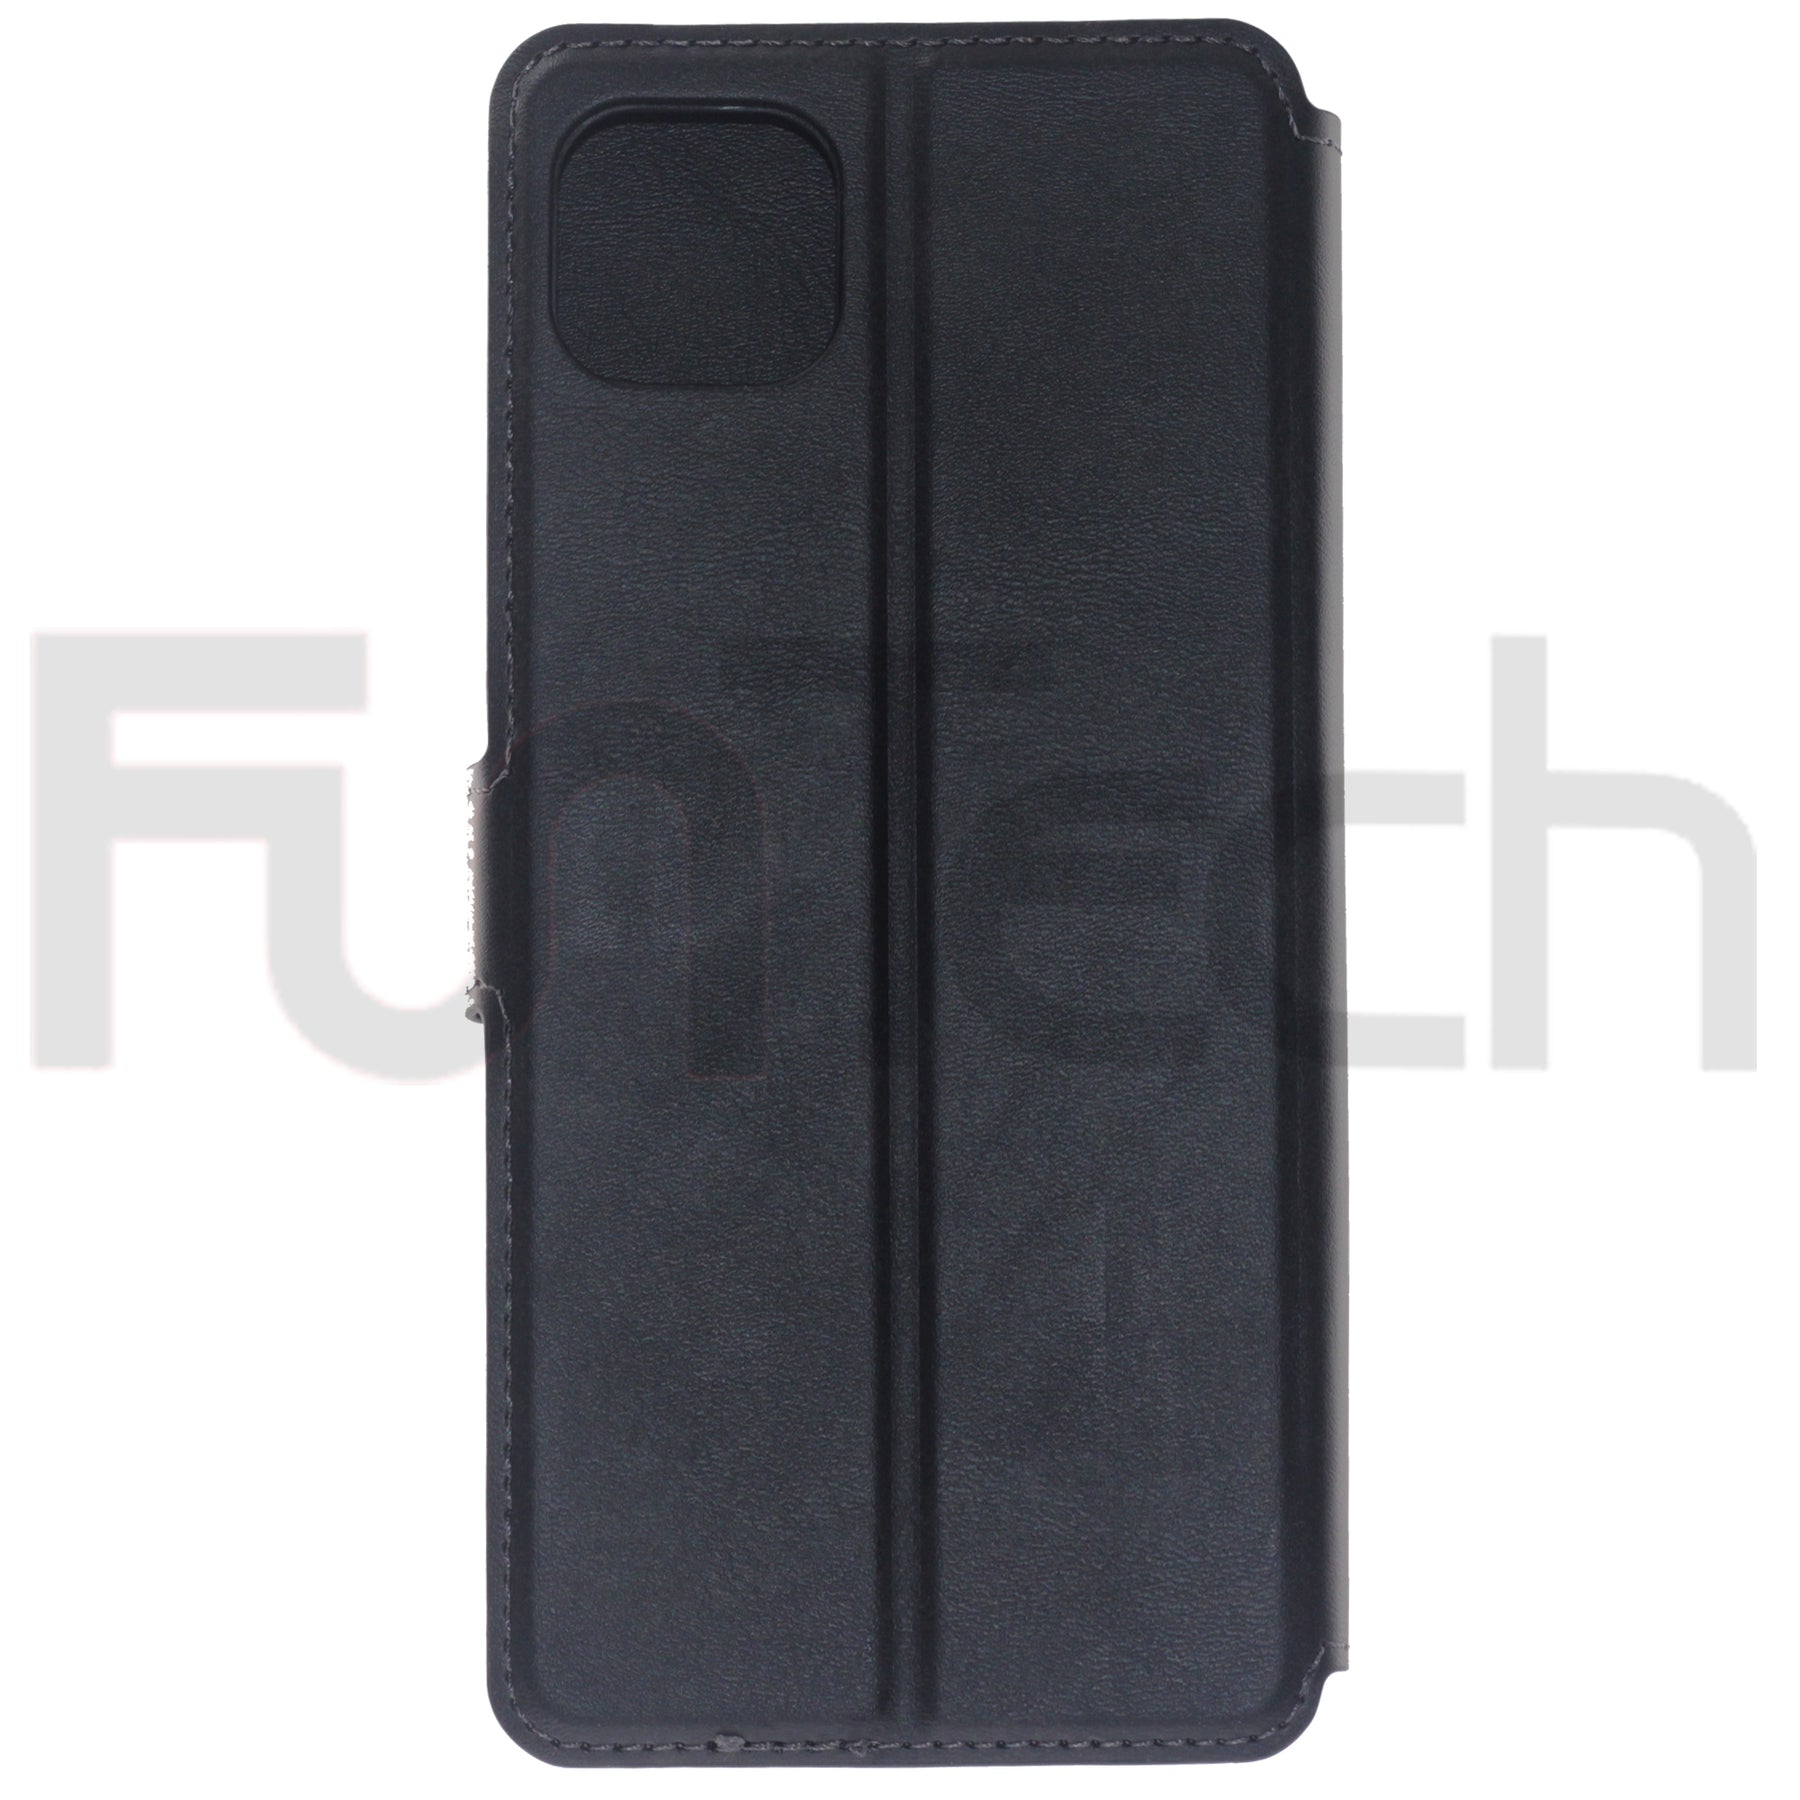 Samsung A22 5G, Leather Wallet Case, Color Black.